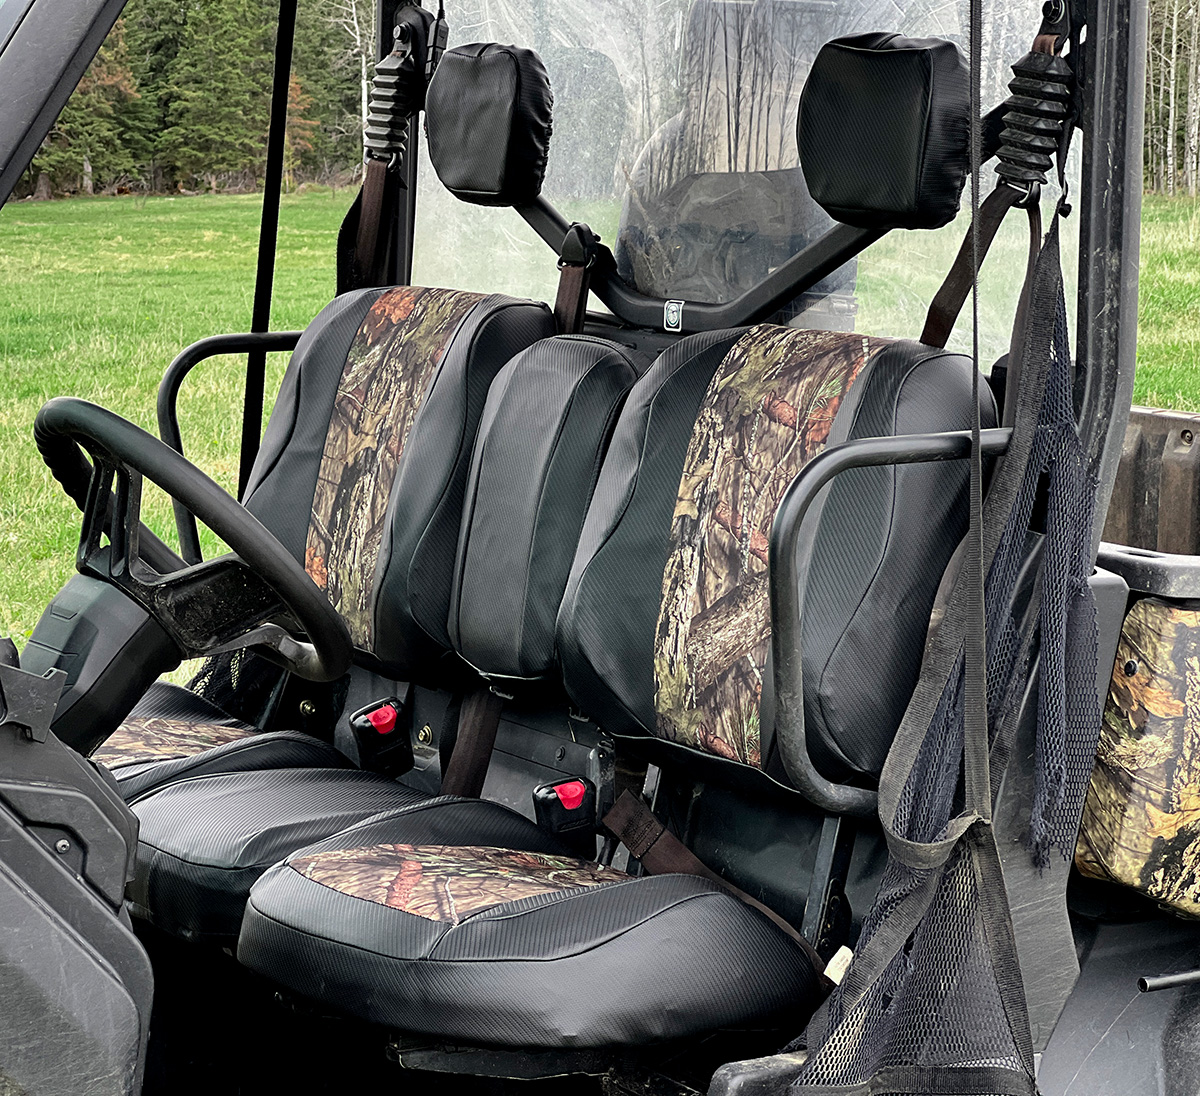 2019 Can Am Defender XMR UTV custom seat covers